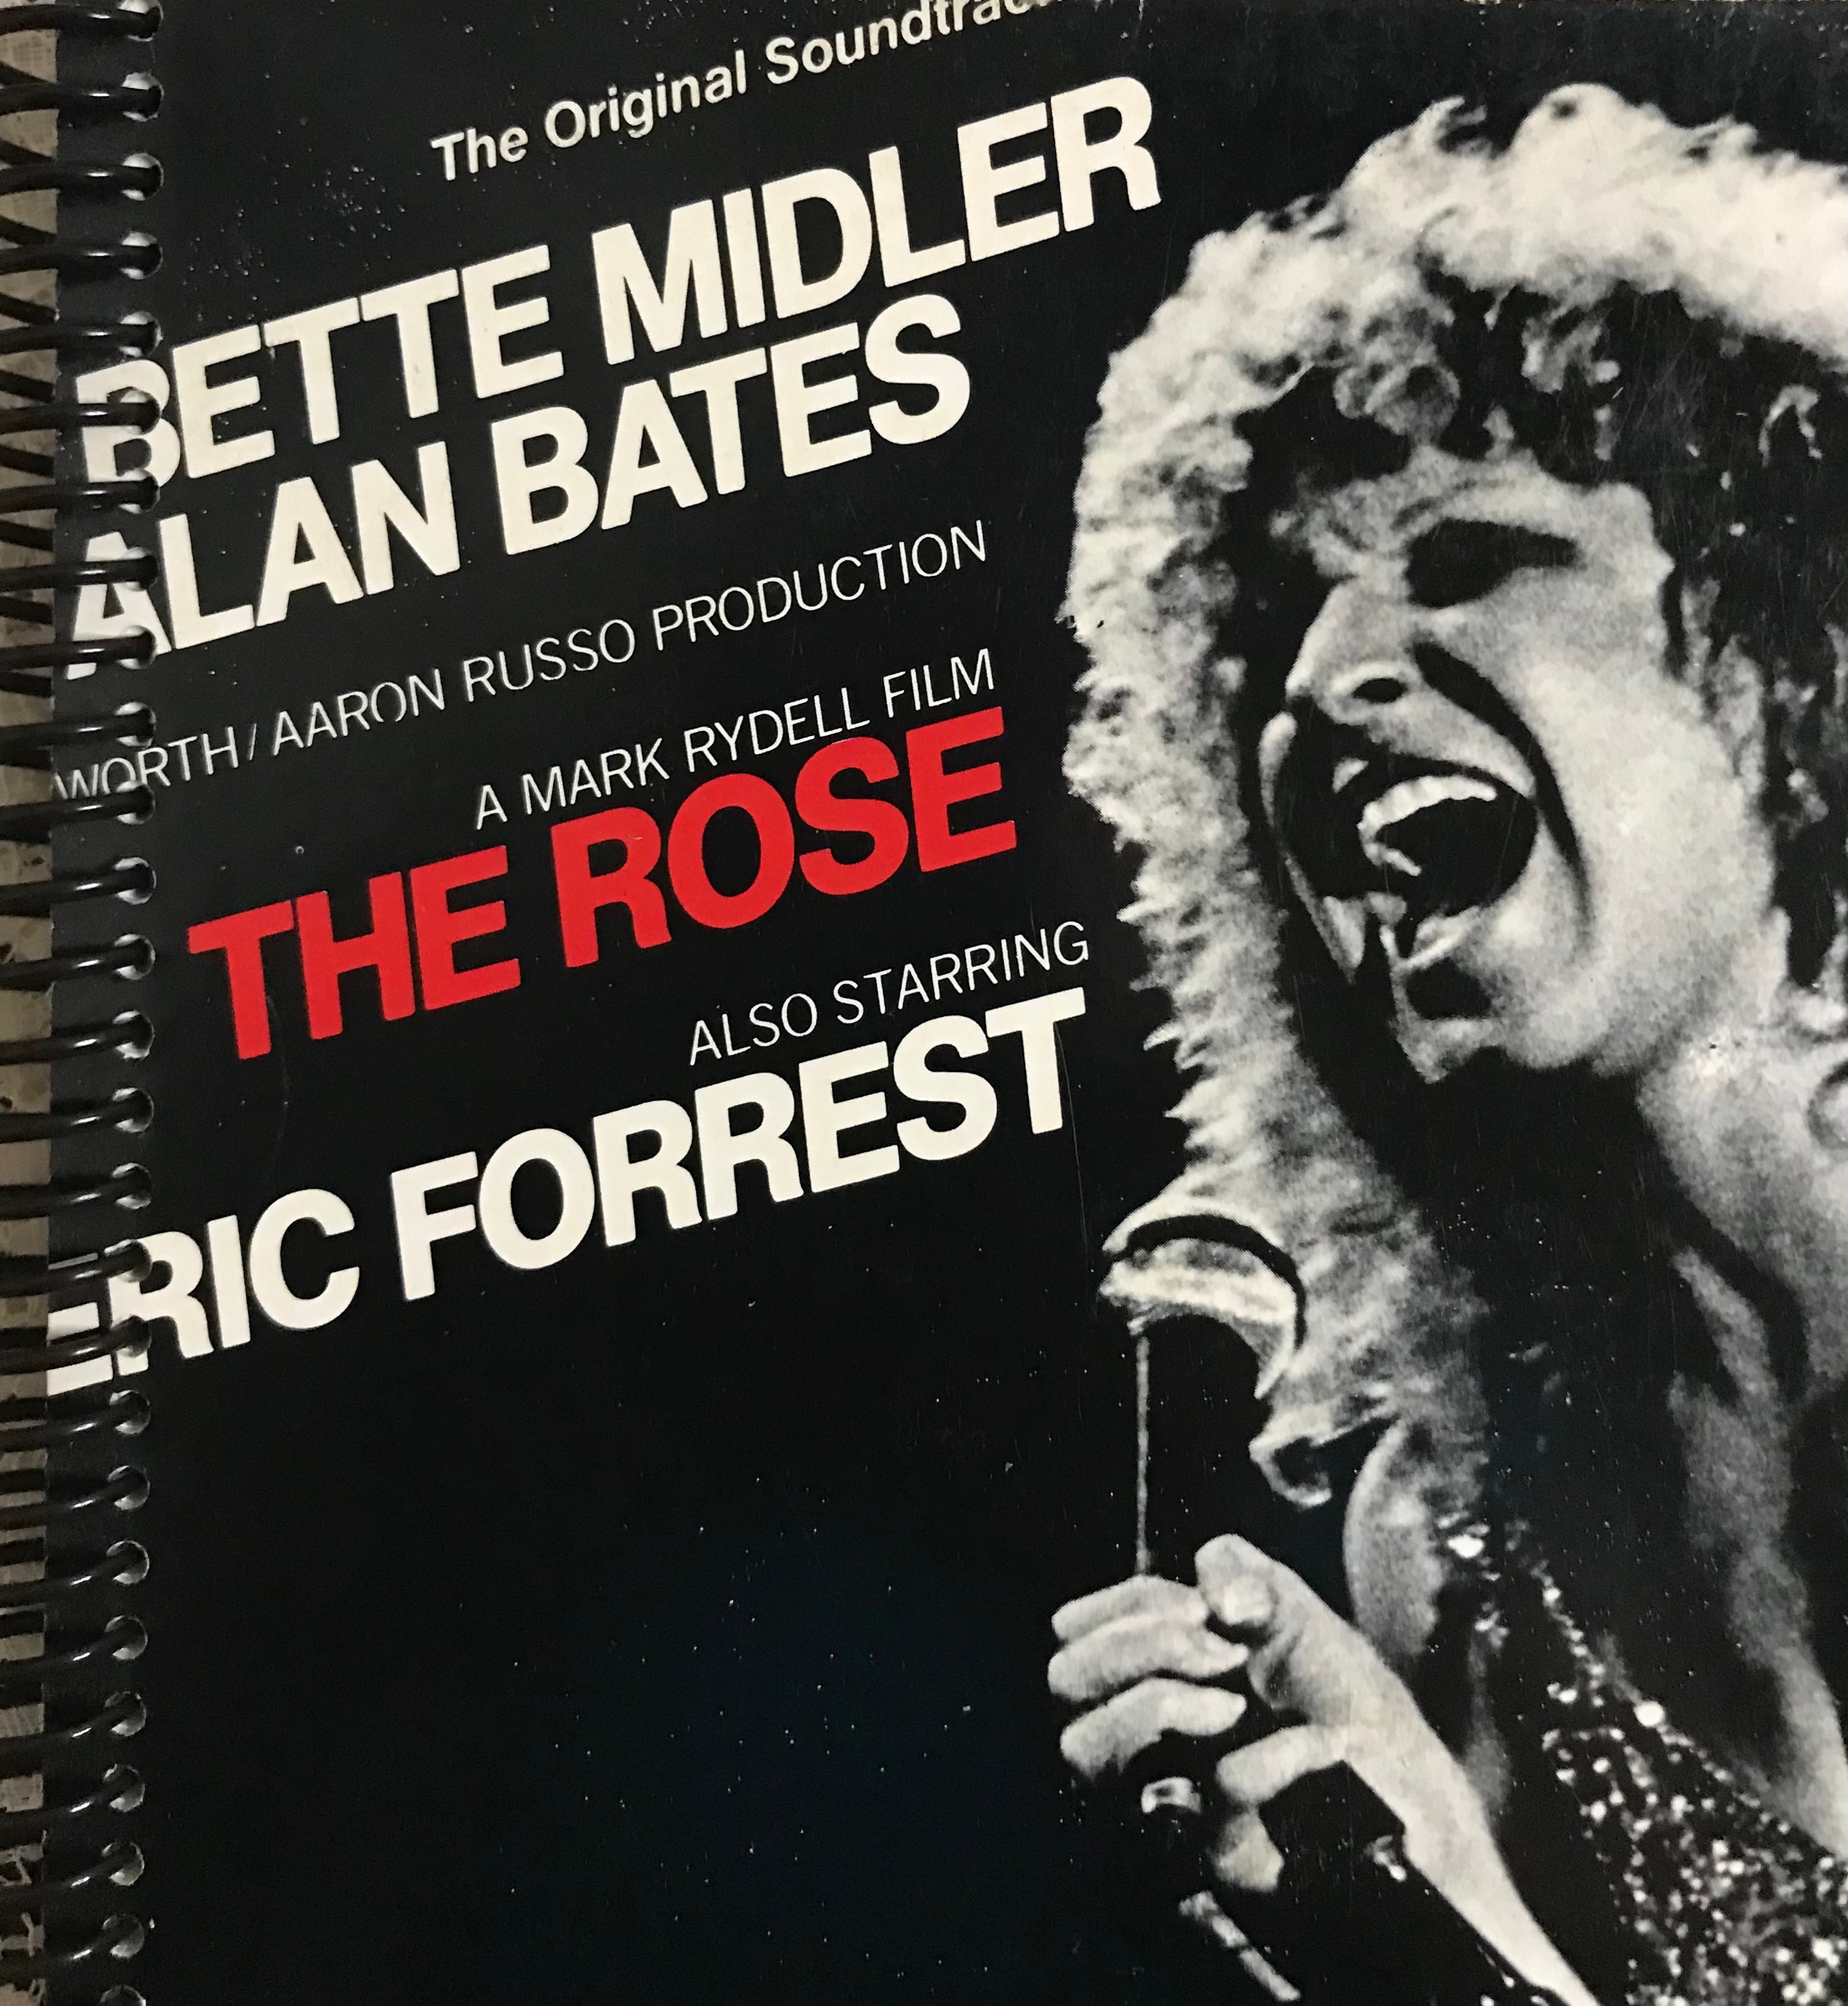 Bette Midler The Rose Album Cover Notebook